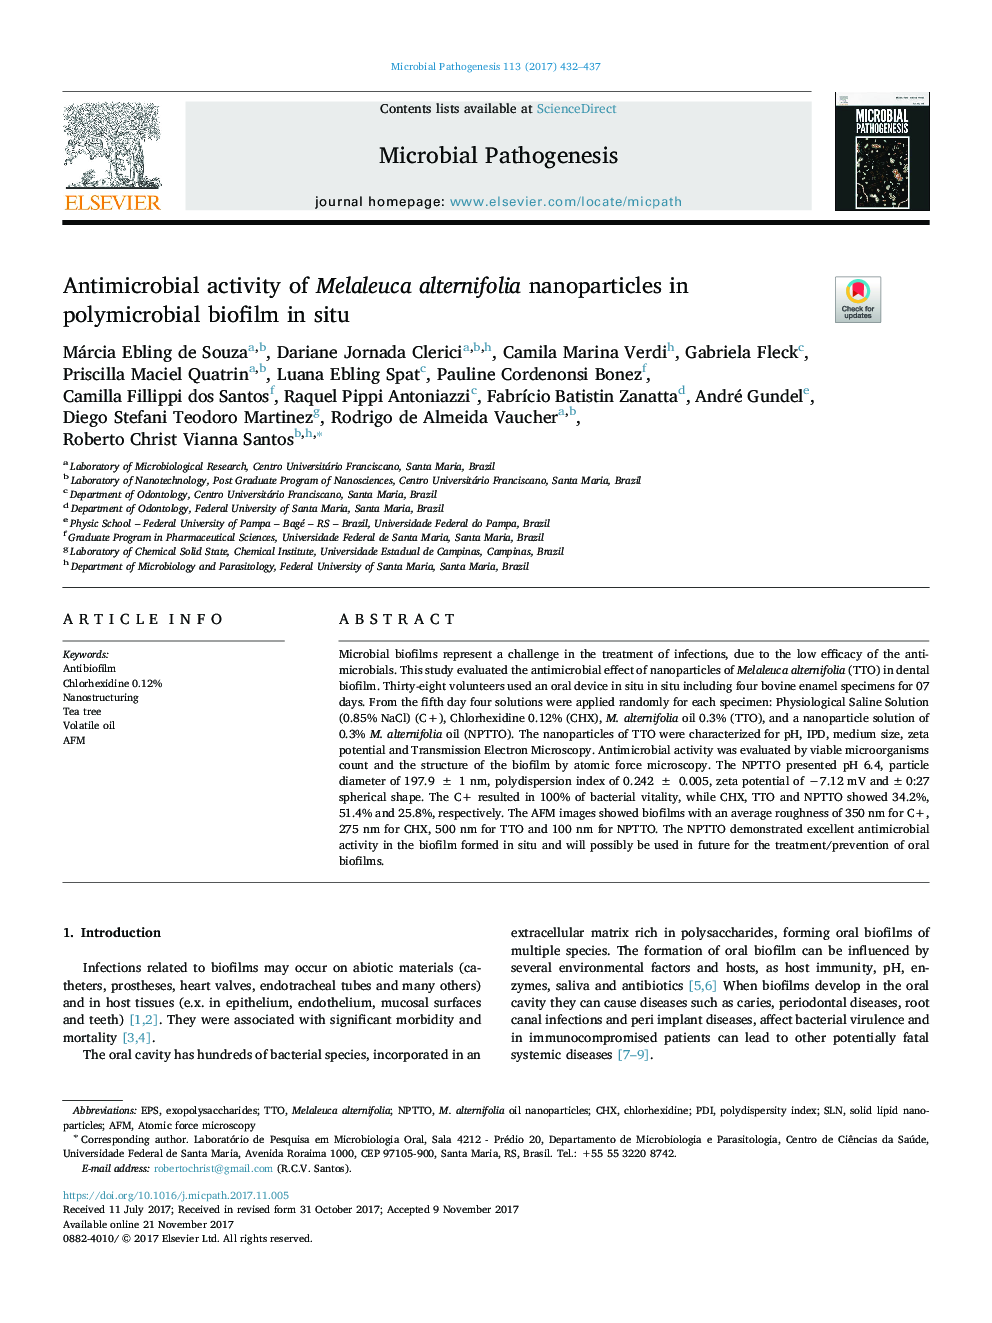 Antimicrobial activity of Melaleuca alternifolia nanoparticles in polymicrobial biofilm in situ